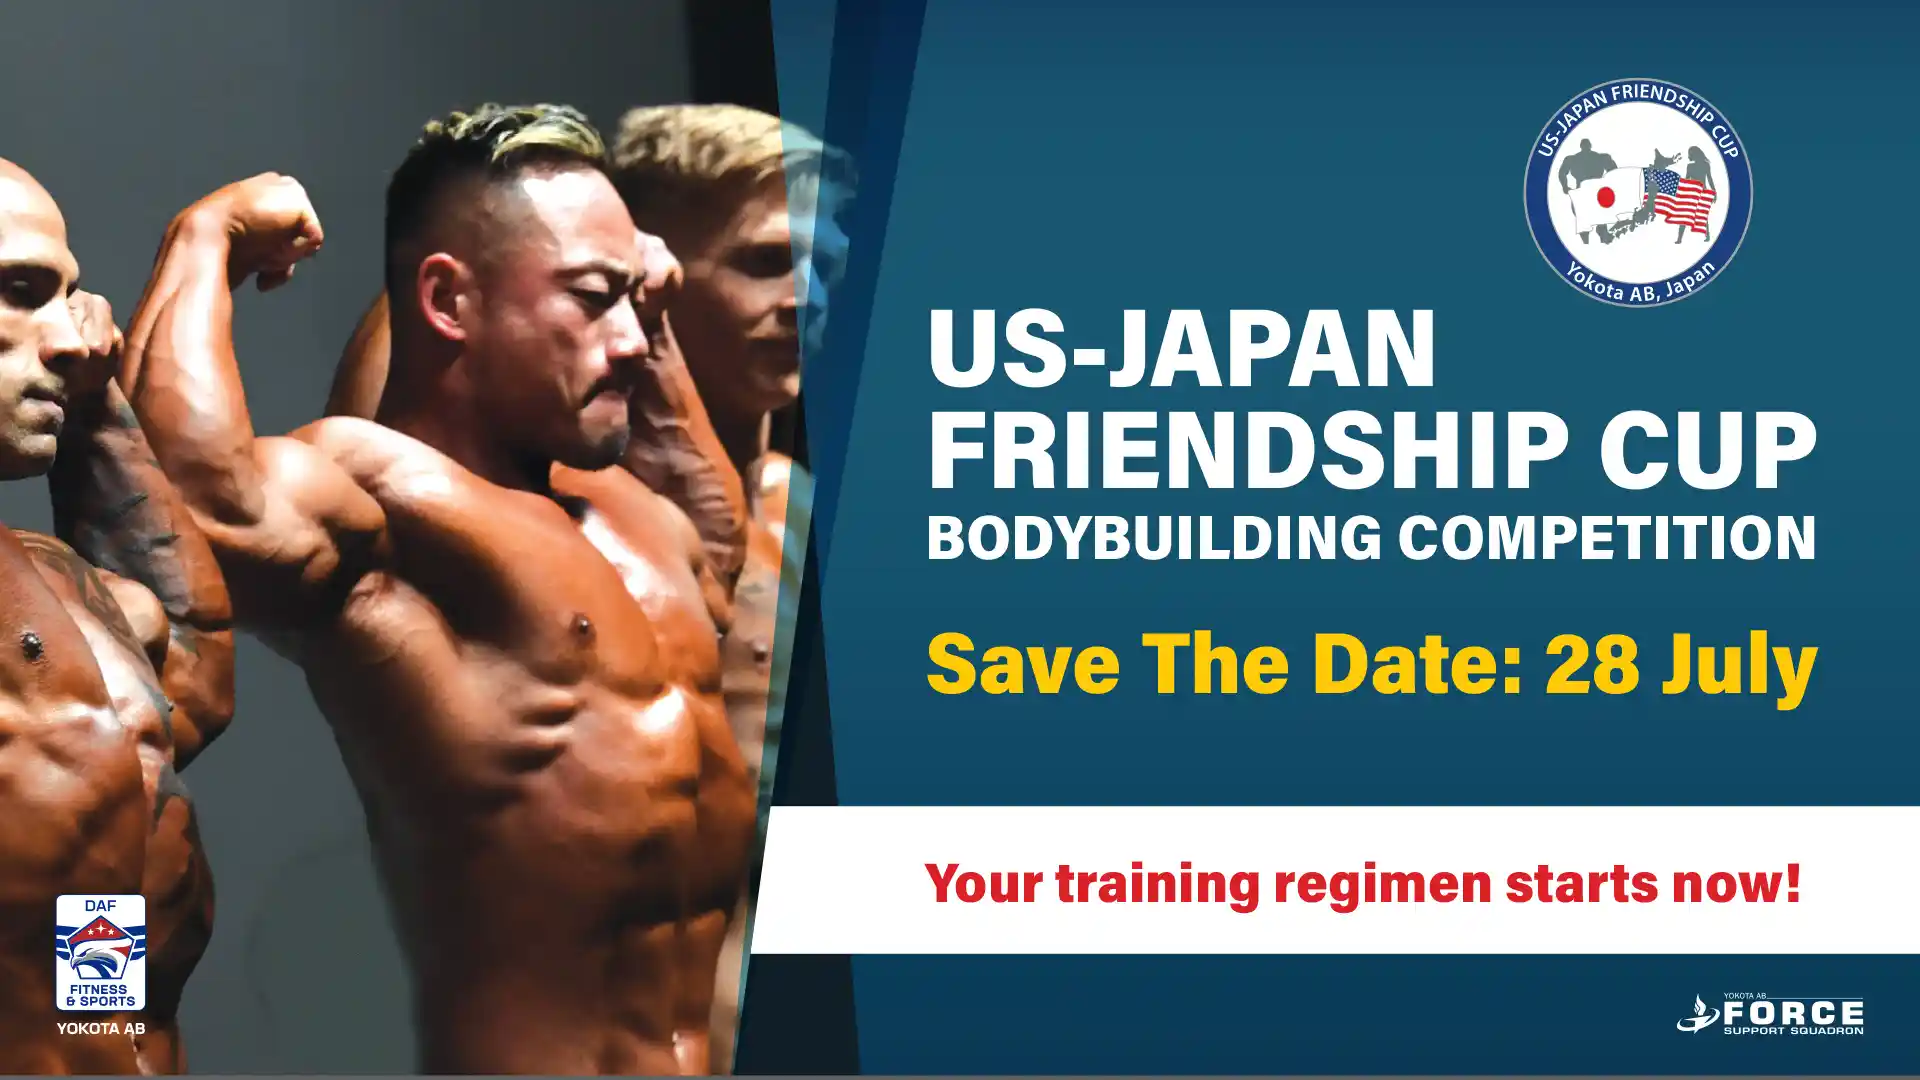 Us-Japan Friendship Cup Bodybuilding Competition